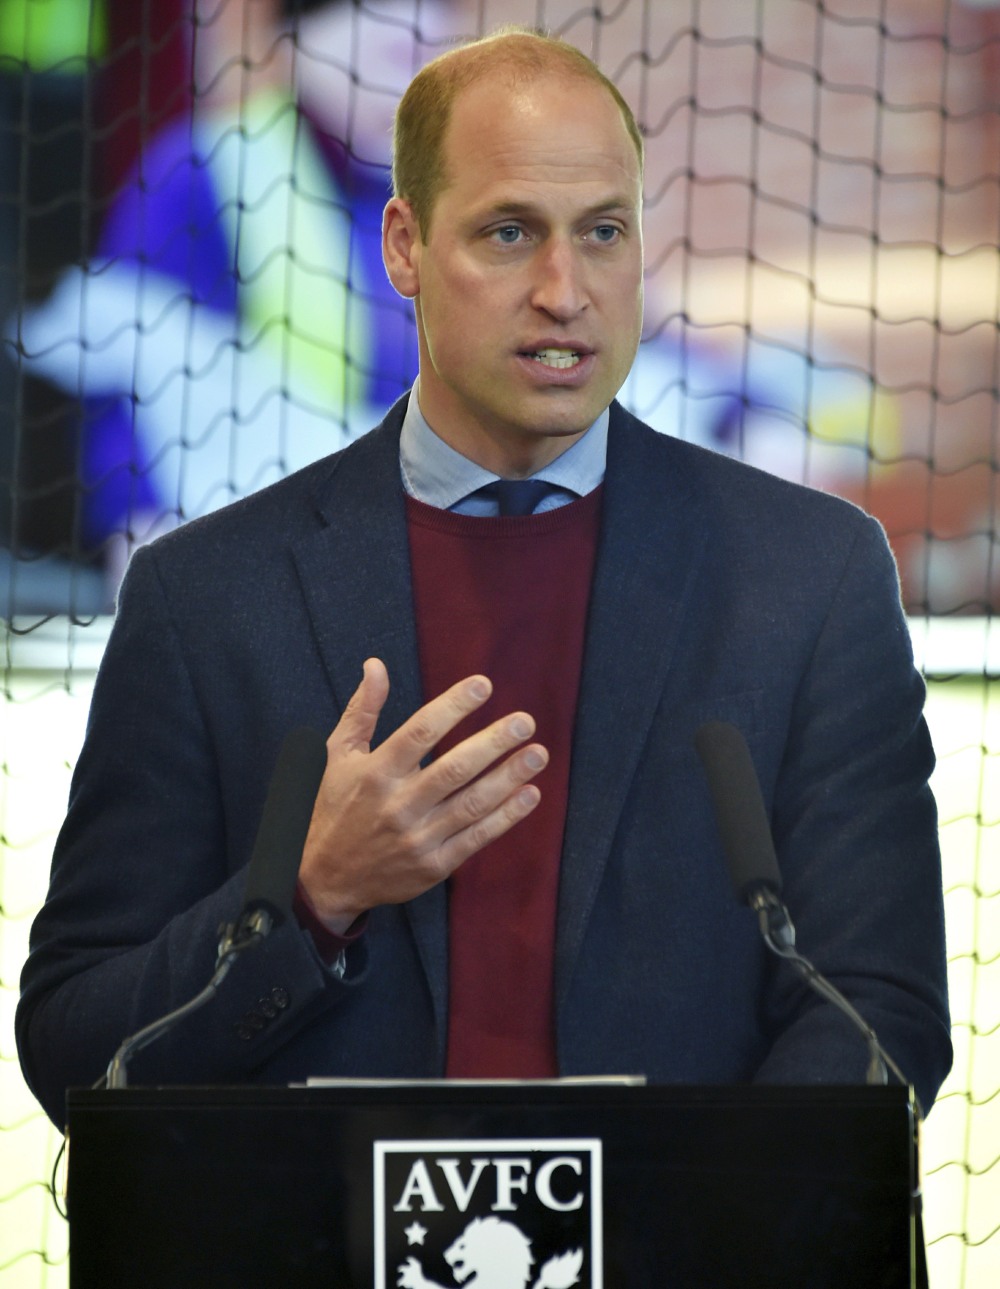 Britain's Prince William, the Duke of Cambridge, unveils a plaque, during a visit to Aston Villa